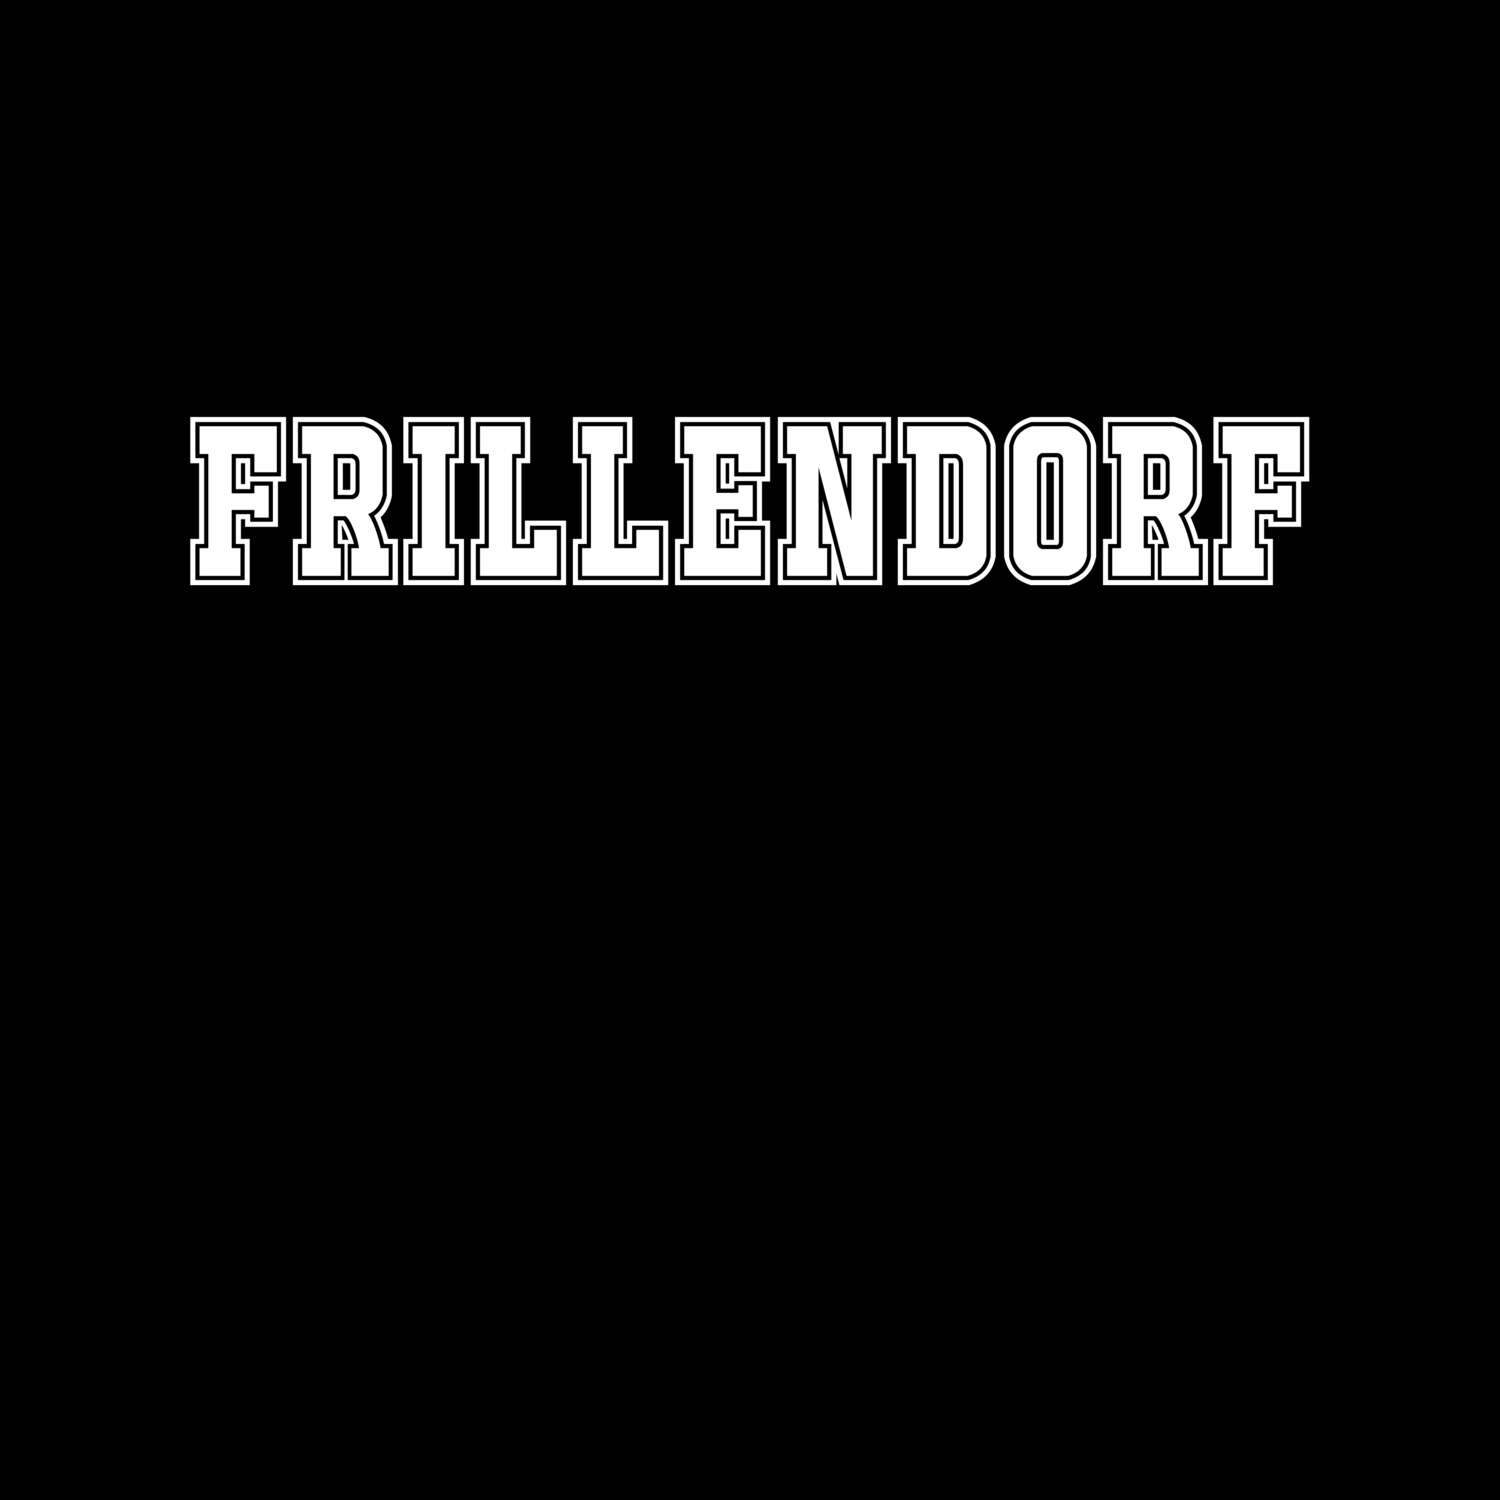 Frillendorf T-Shirt »Classic«